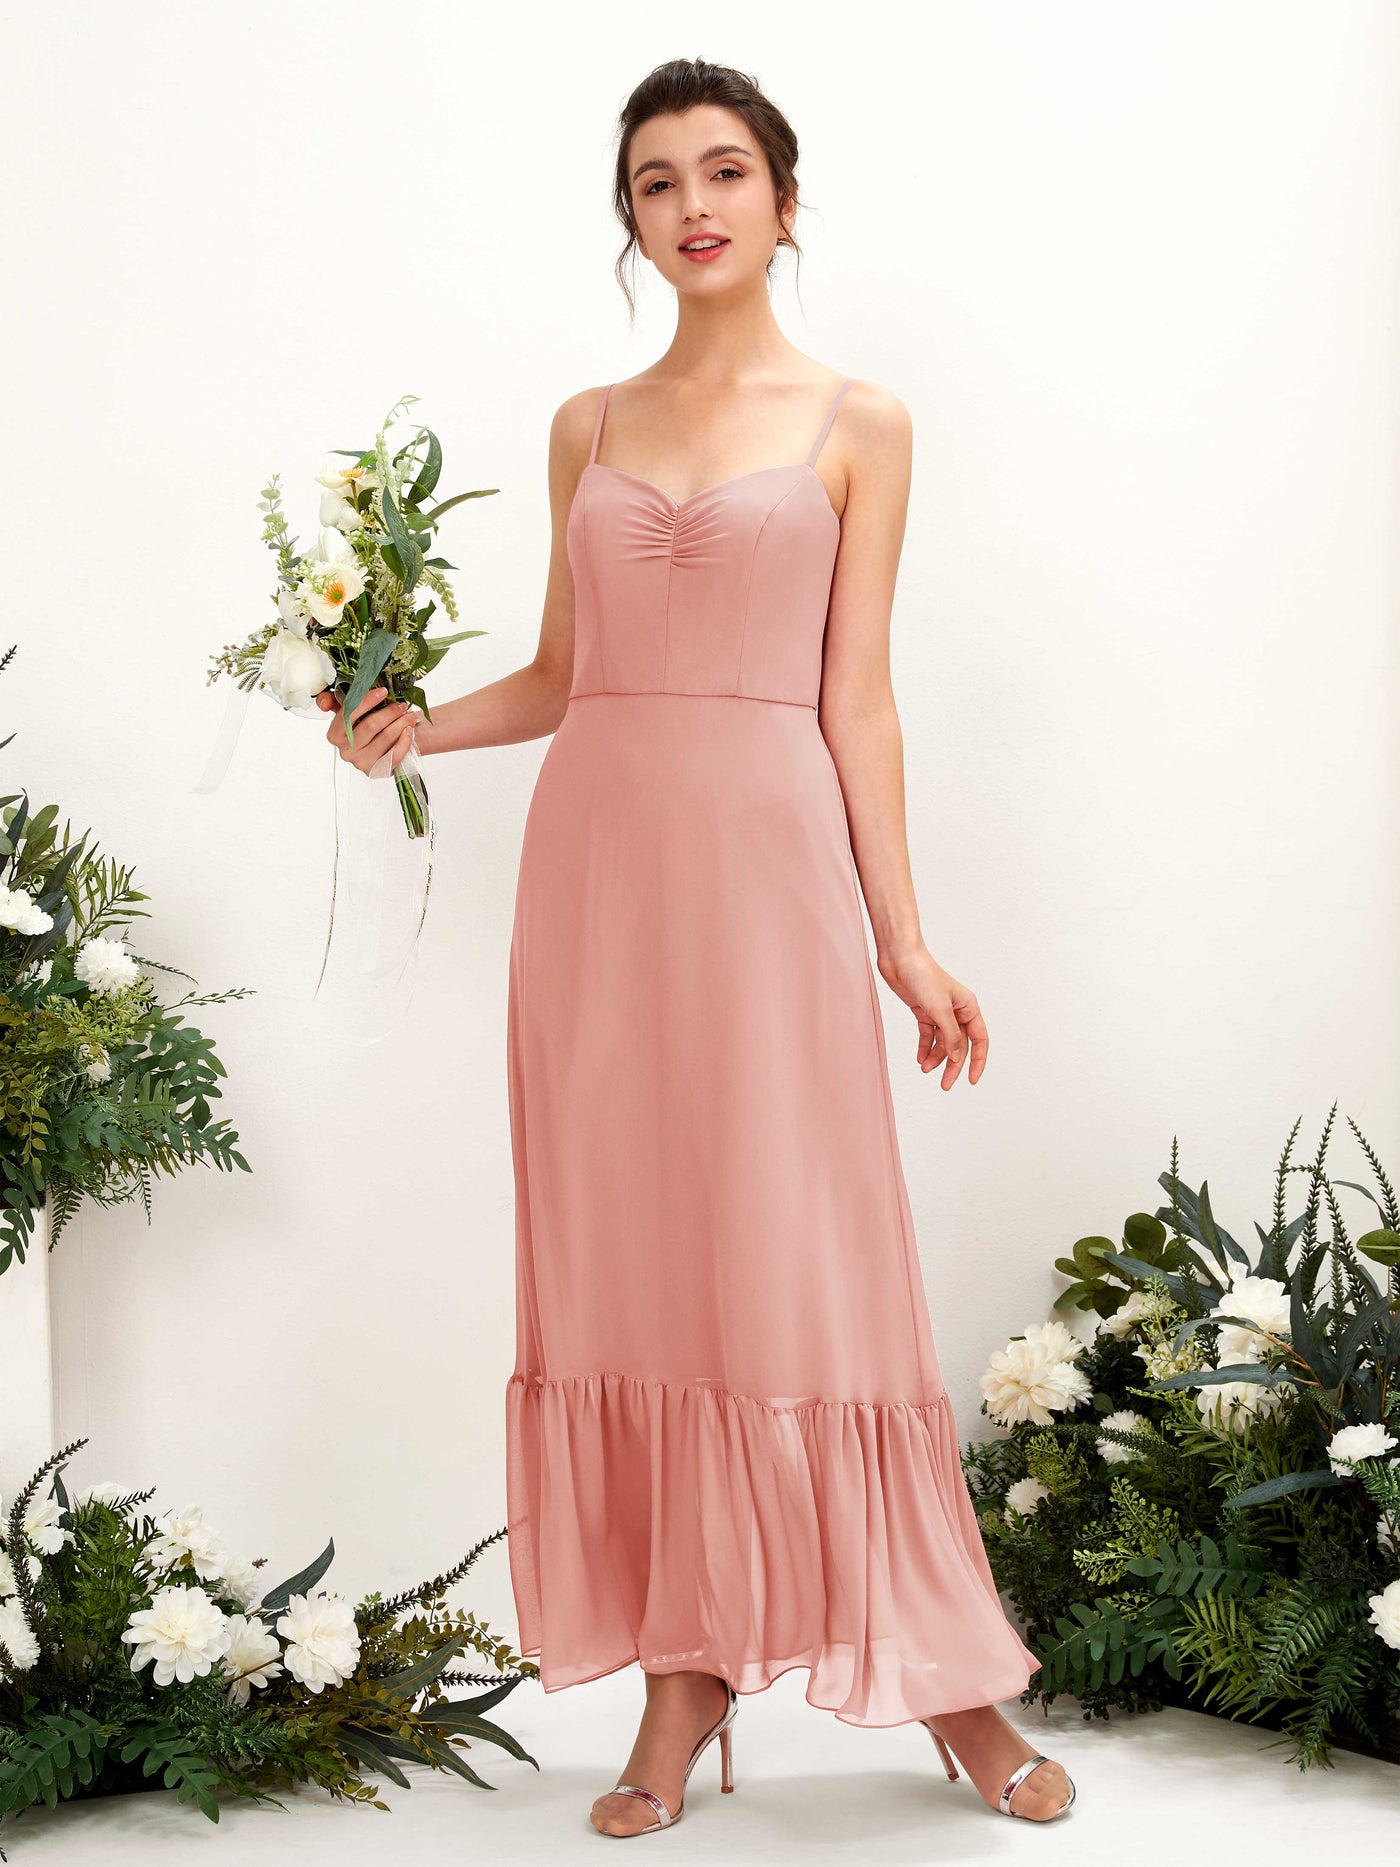 Champagne Rose Bridesmaid Dresses Bridesmaid Dress Chiffon Spaghetti-straps Full Length Sleeveless Wedding Party Dress (81223006)#color_champagne-rose